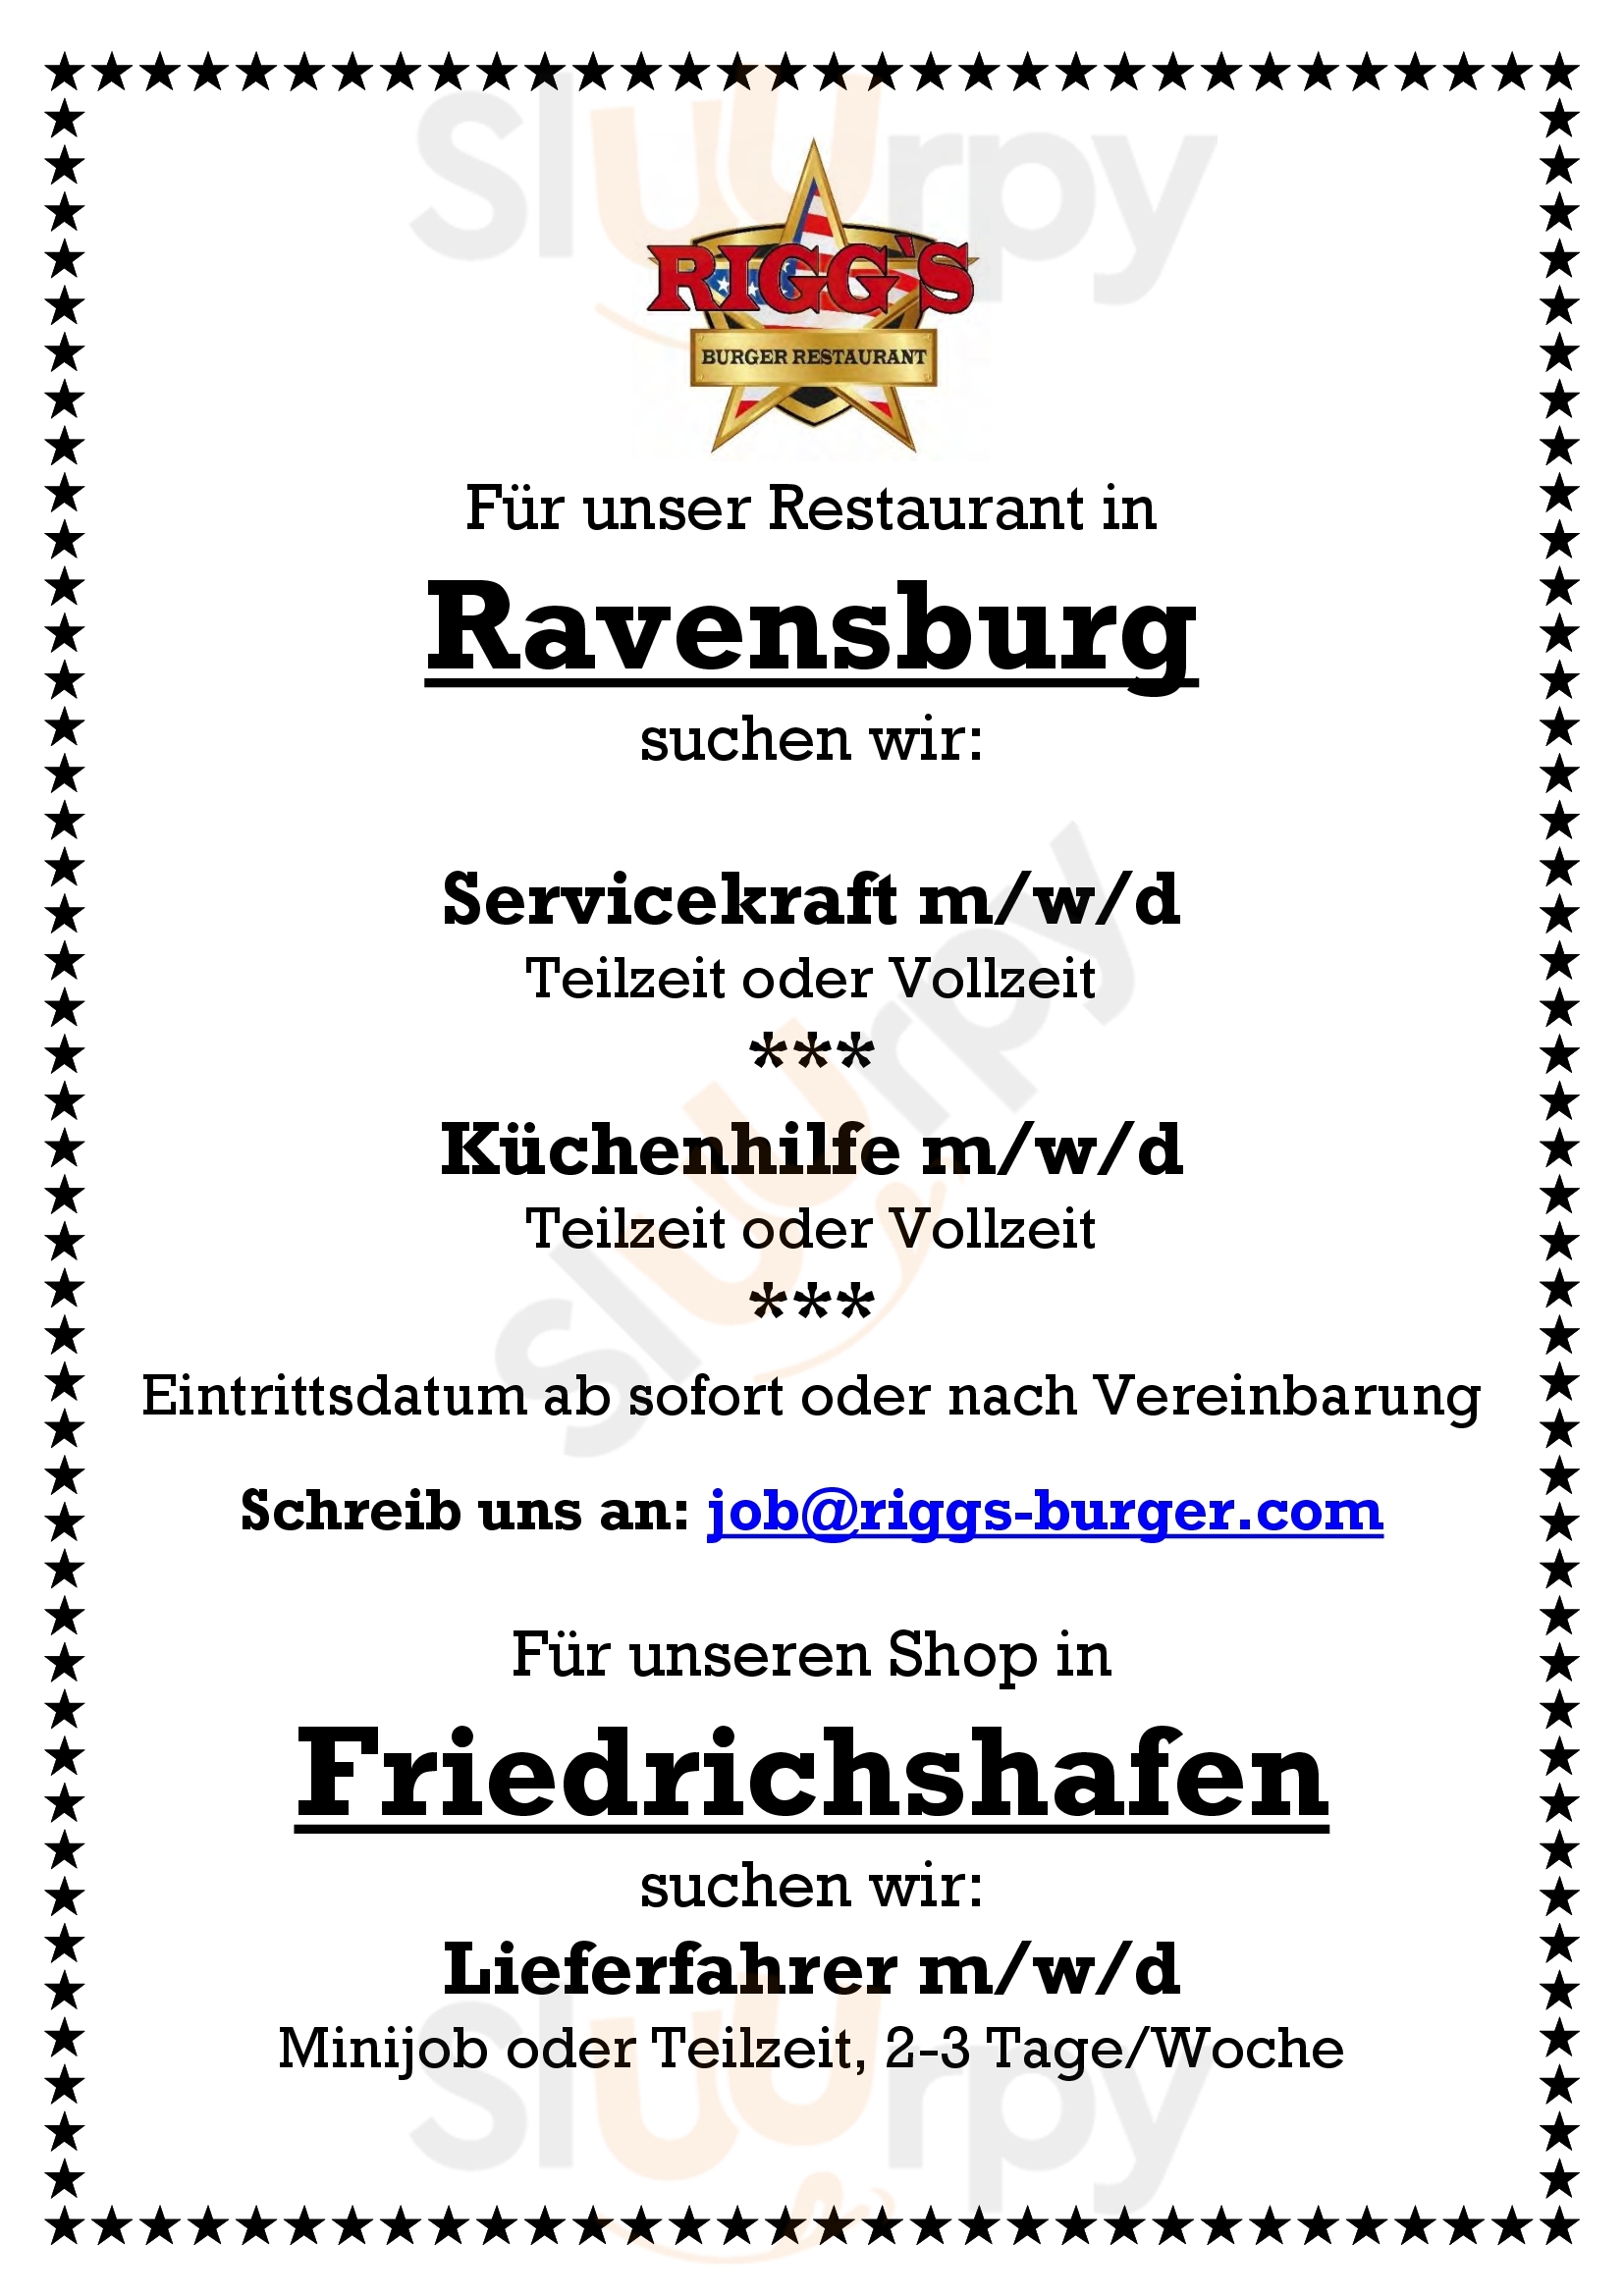 Rigg's Burger Restaurant Ravensburg Menu - 1